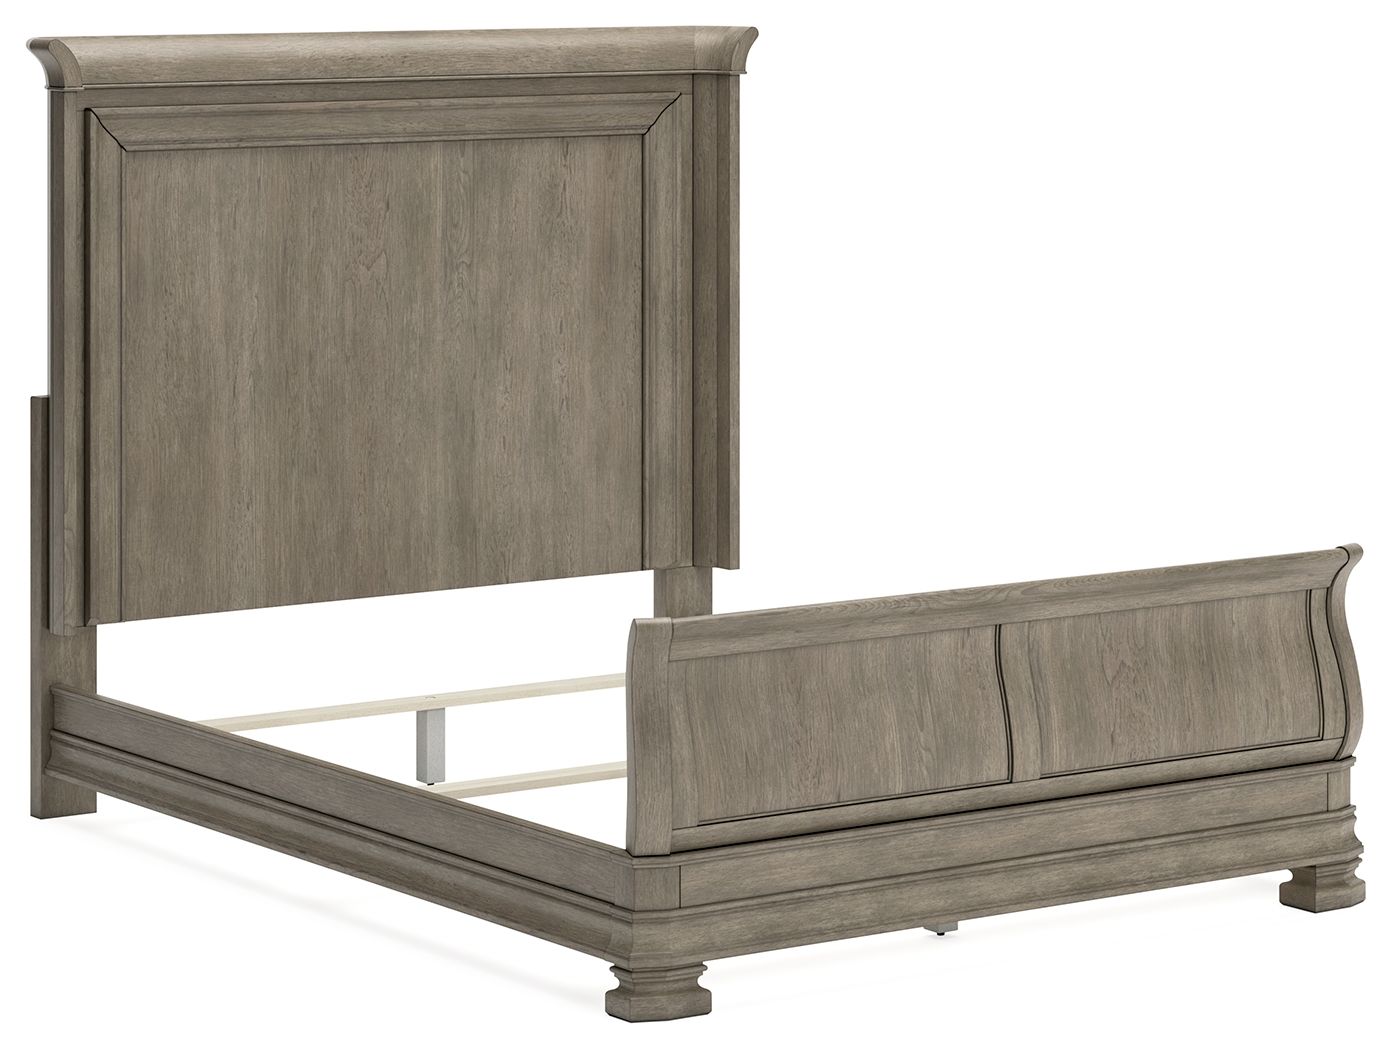 Lexorne - Gray - 6 Pc. - Dresser, Mirror, Queen Sleigh Bed, 2 Nightstands